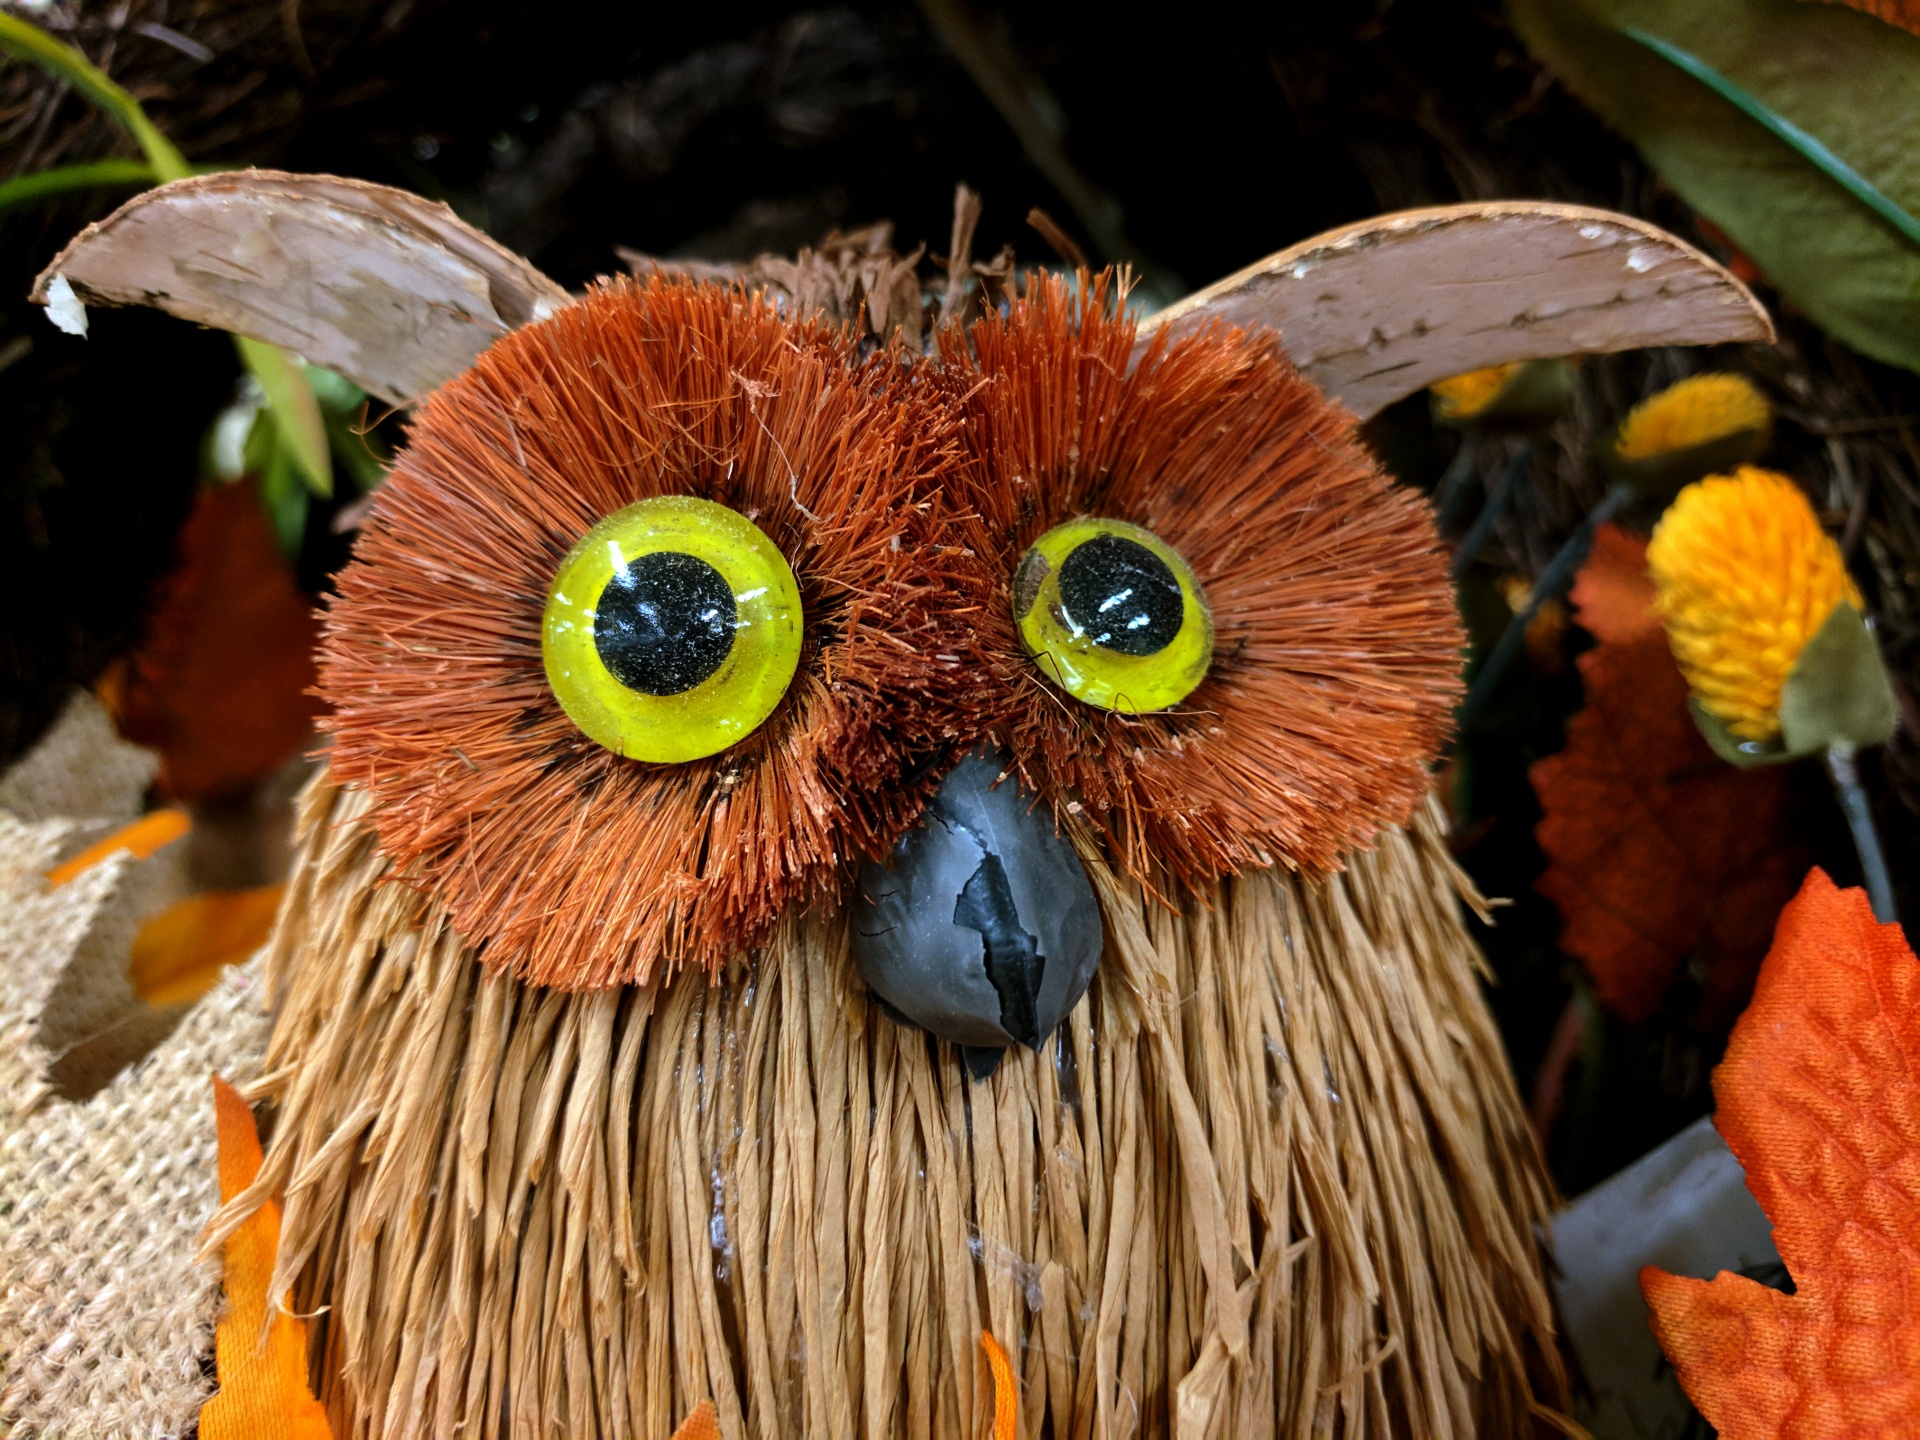 Home Decor Owl / Owl Home Decor: Amazon.com : 2020 popular 1 trends in home & garden, figurines & miniatures, lights & lighting, toys & hobbies with decor home owl and 1.